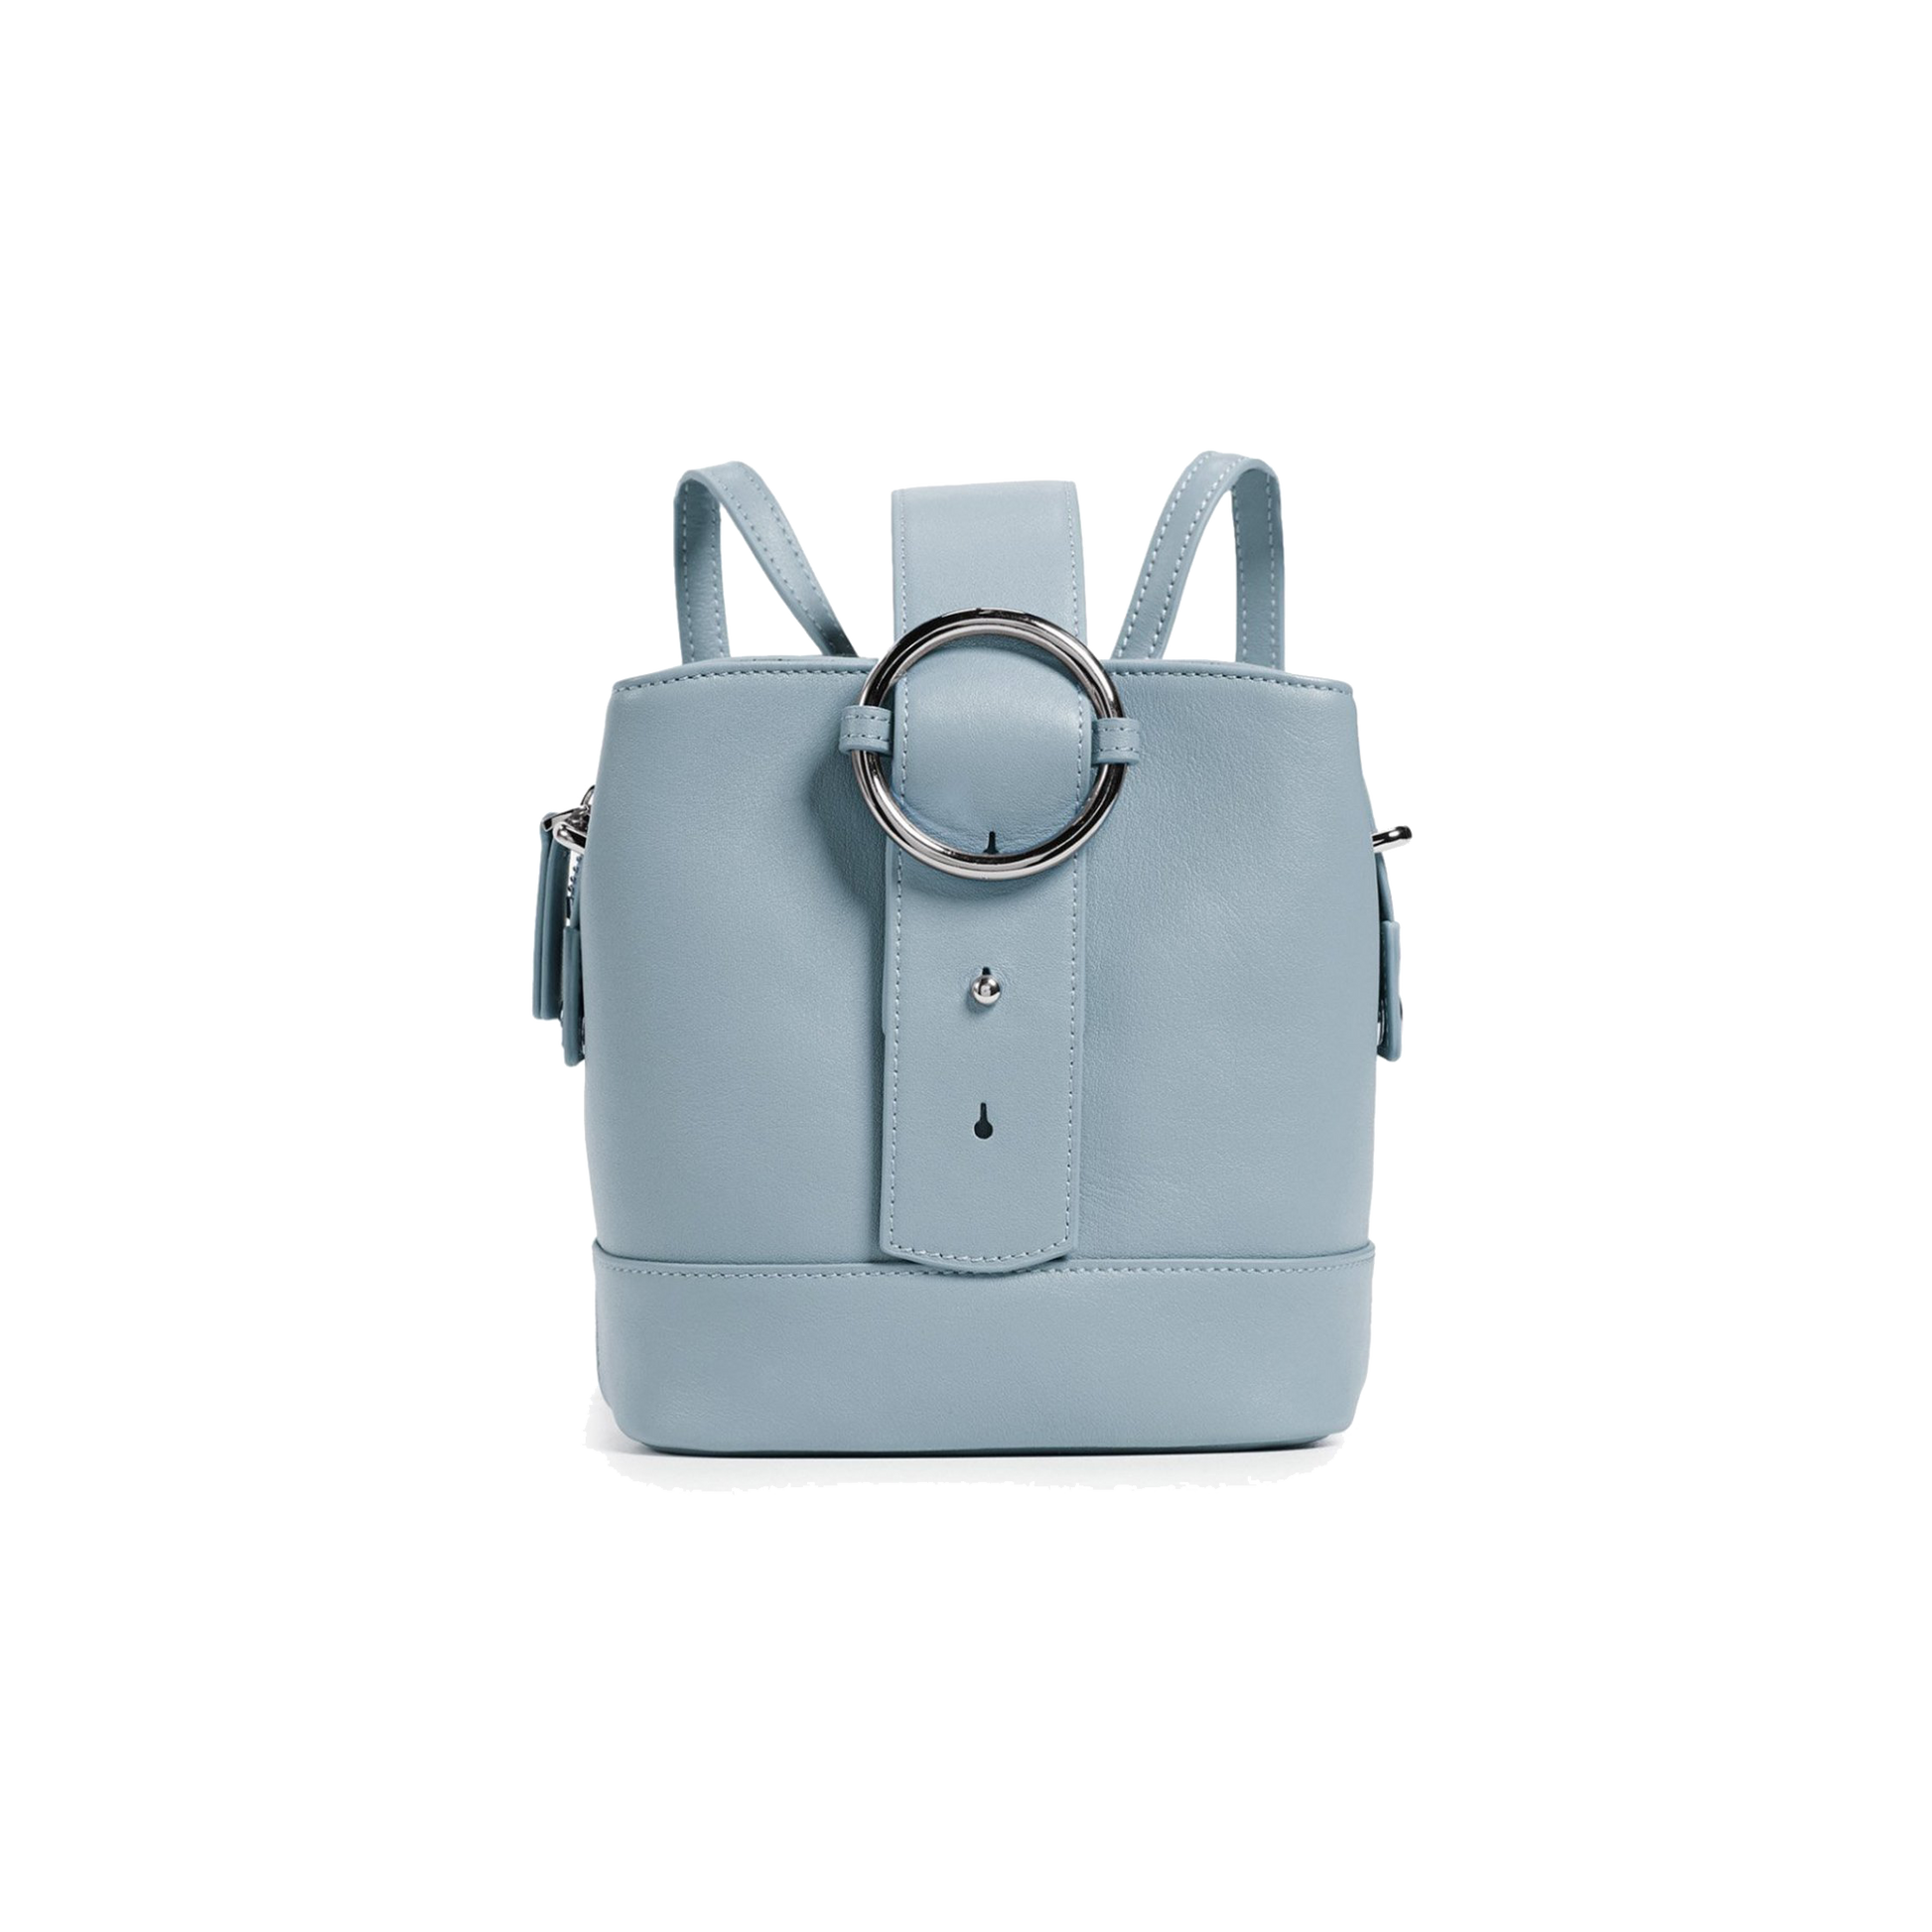 Addicted Mini Backpack in Cloudy Blue.